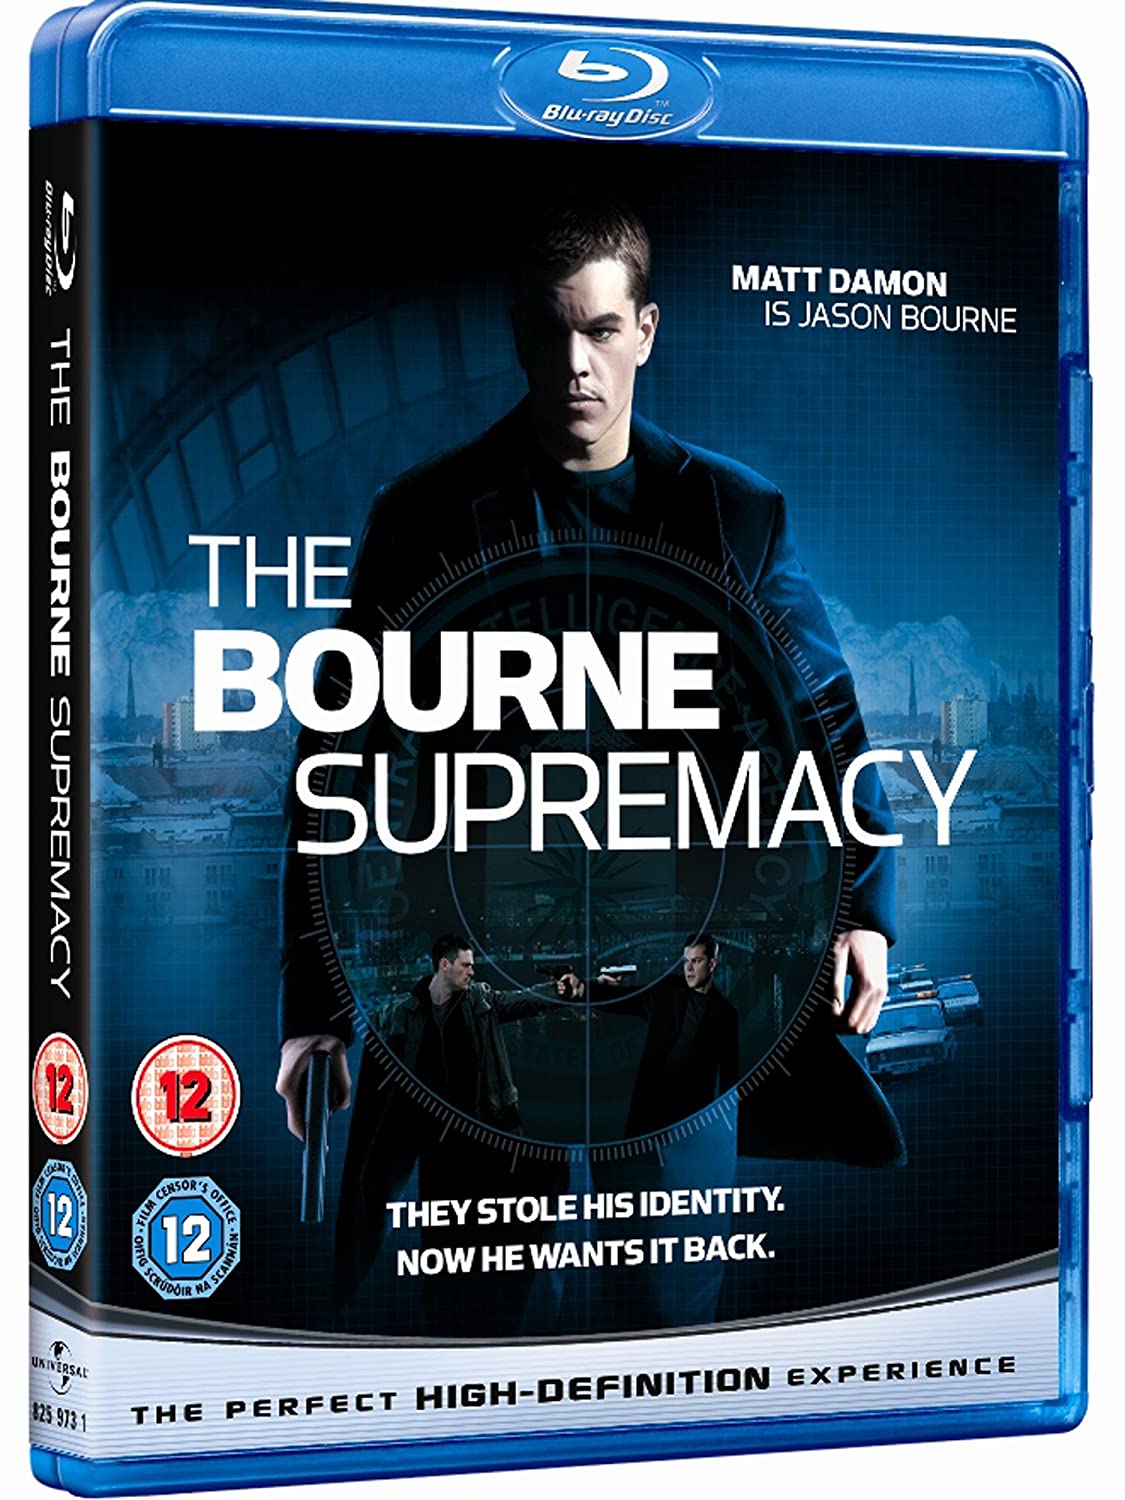 The Bourne Supremacy [Blu-ray][Region Free]